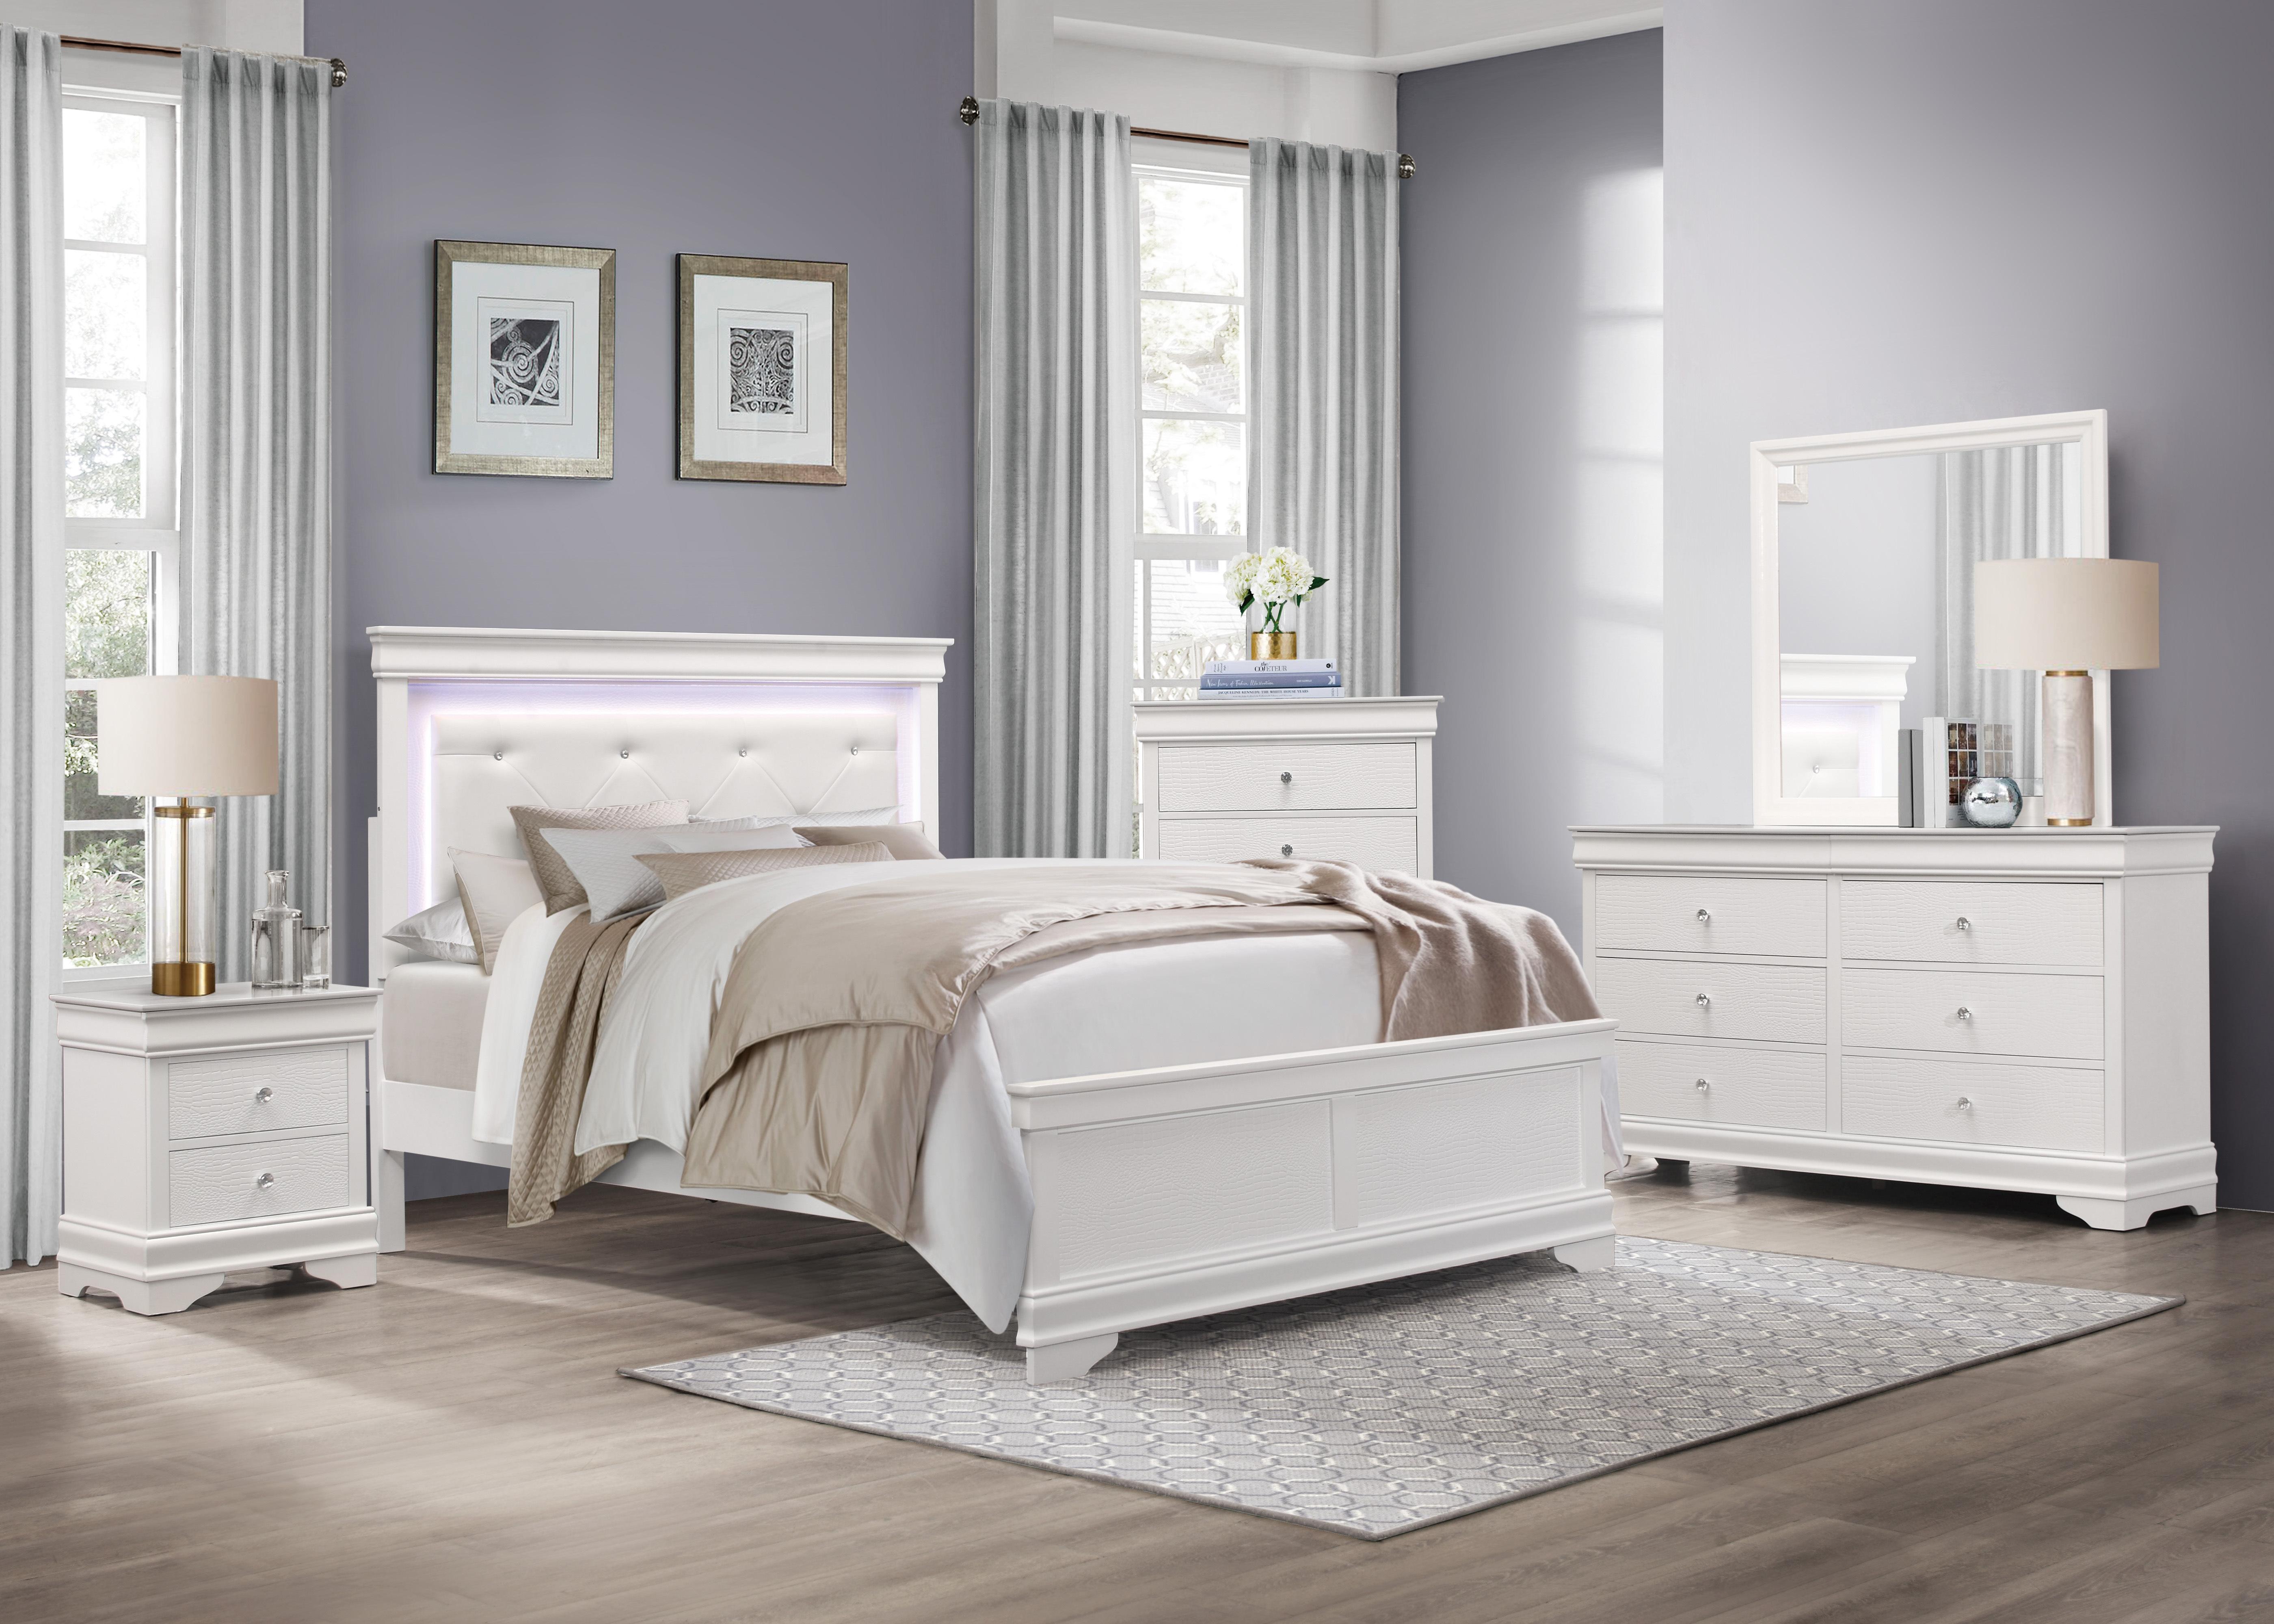 Traditional Bedroom Set 1556WK-1EK-5PC Lana 1556WK-1EK-5PC in White Faux Leather